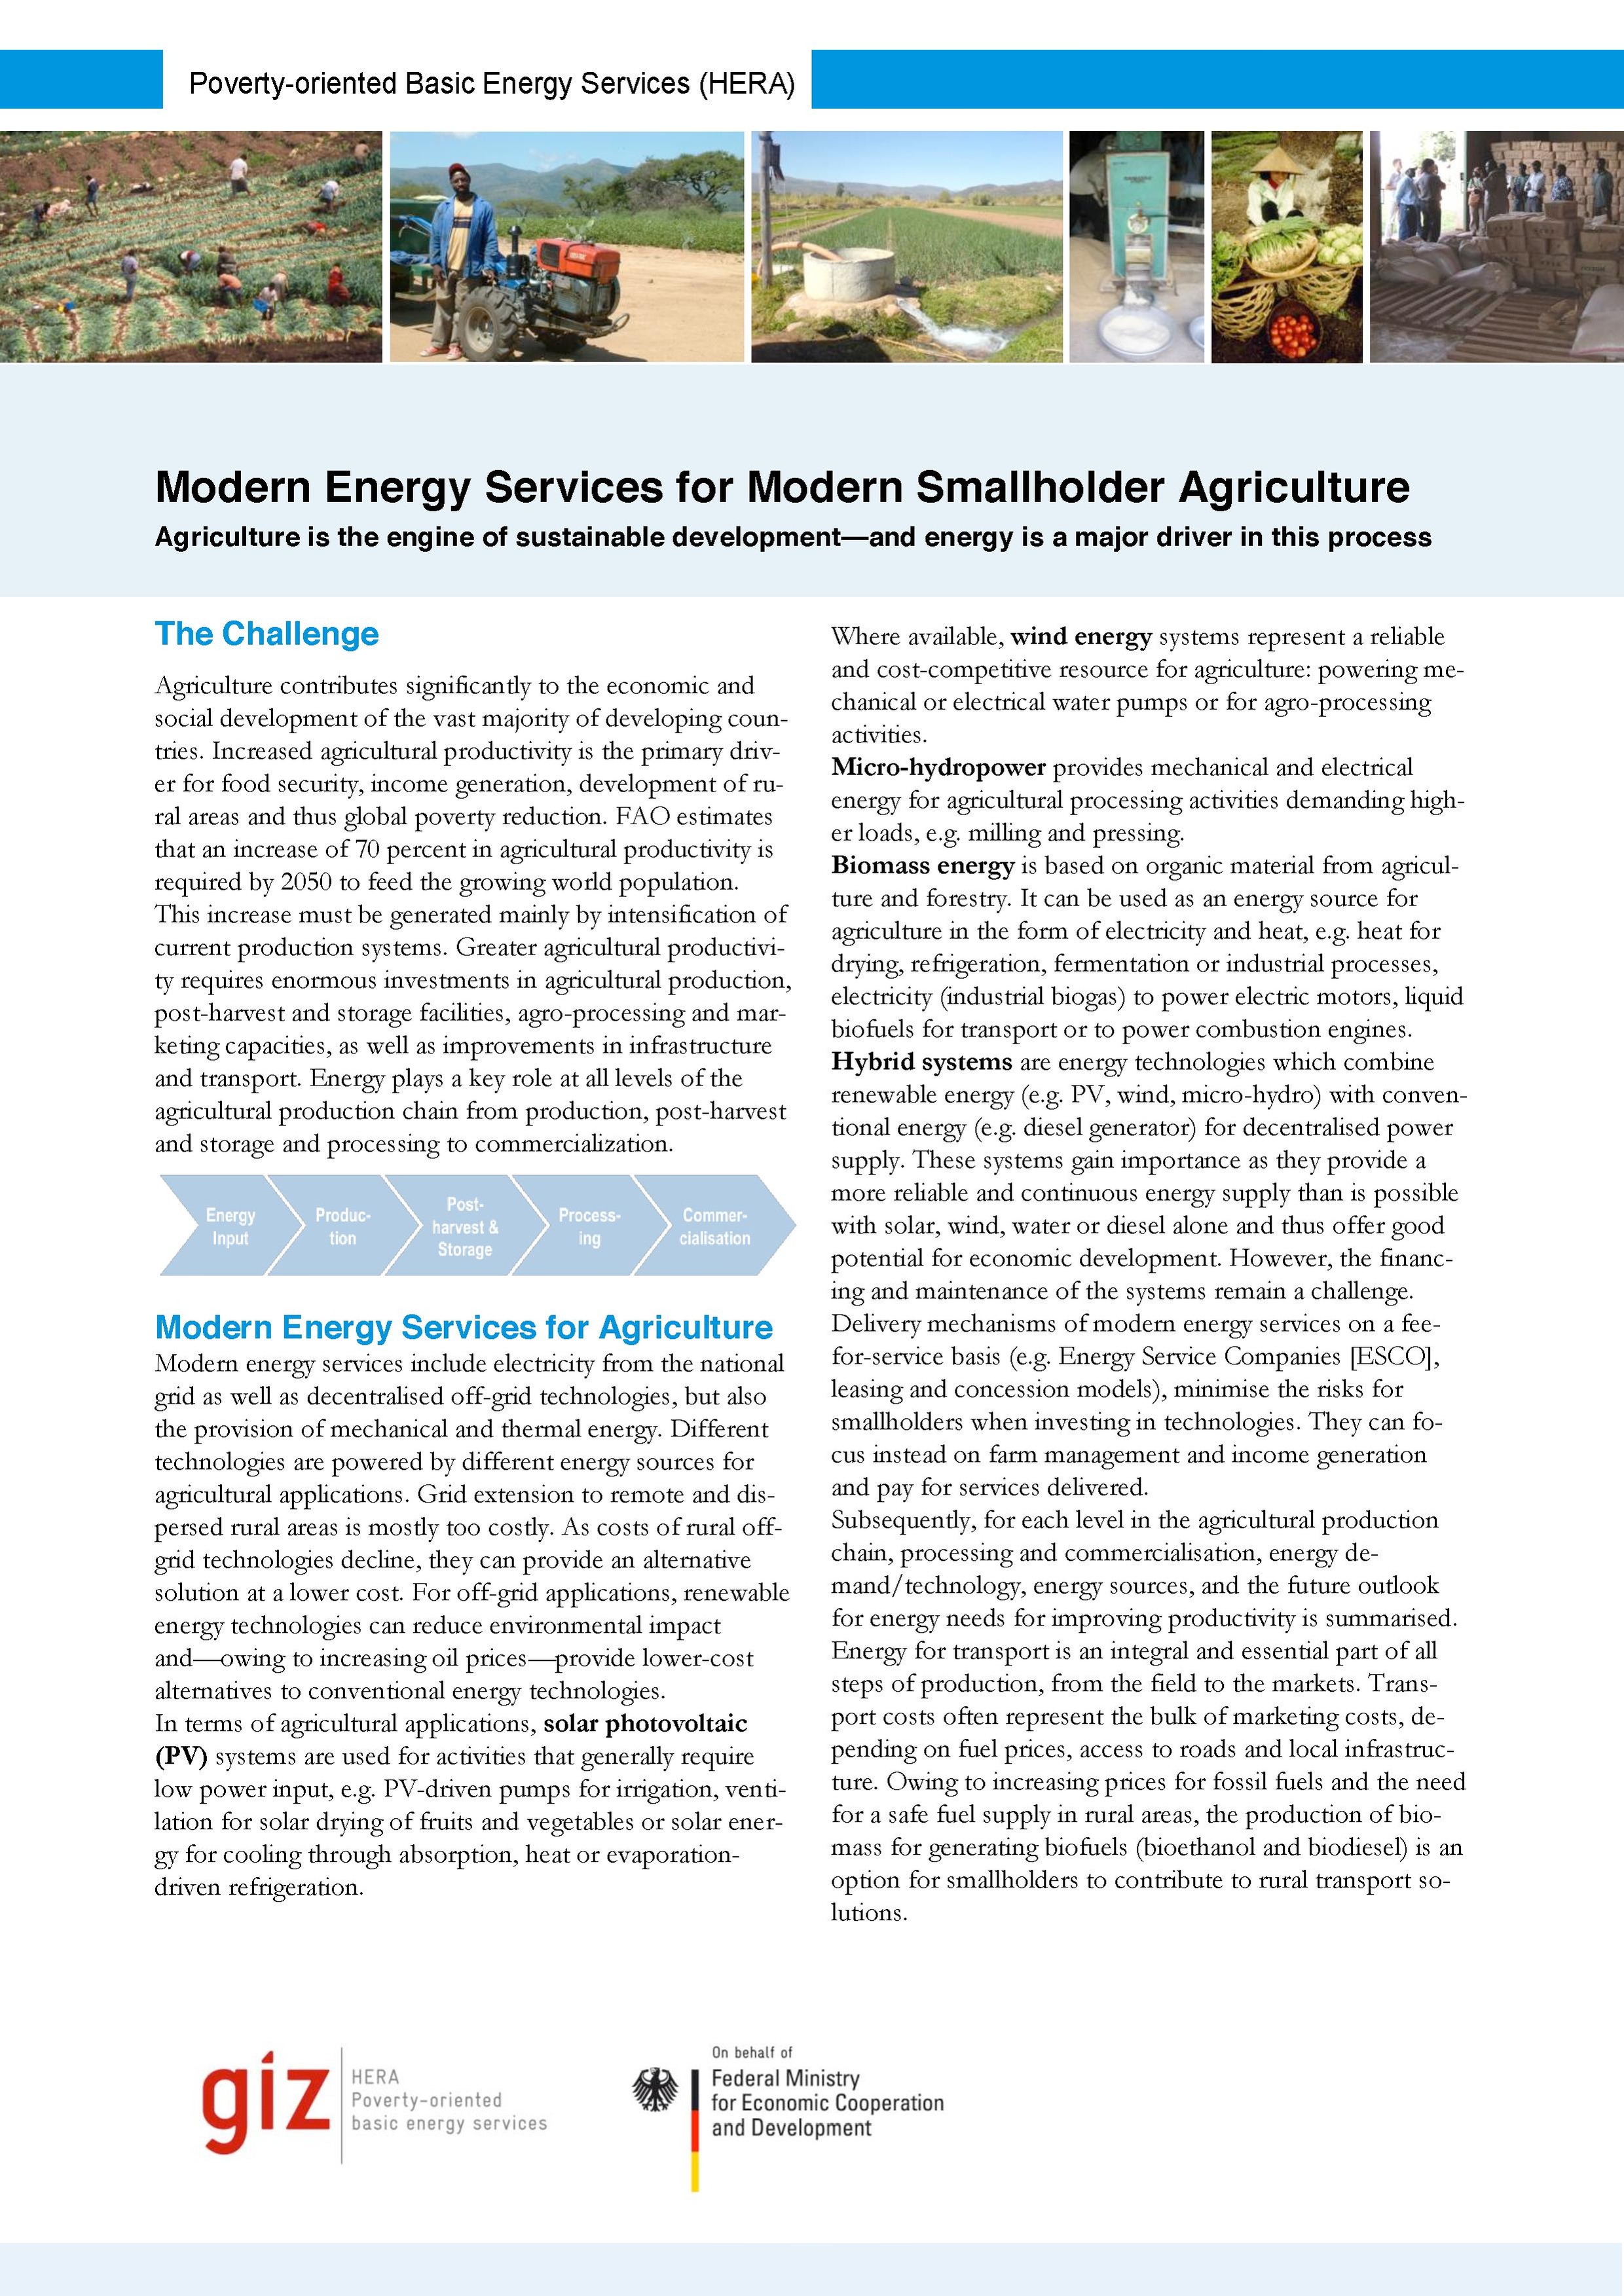 GIZ HERA: Modern Energy for Modern Agriculture